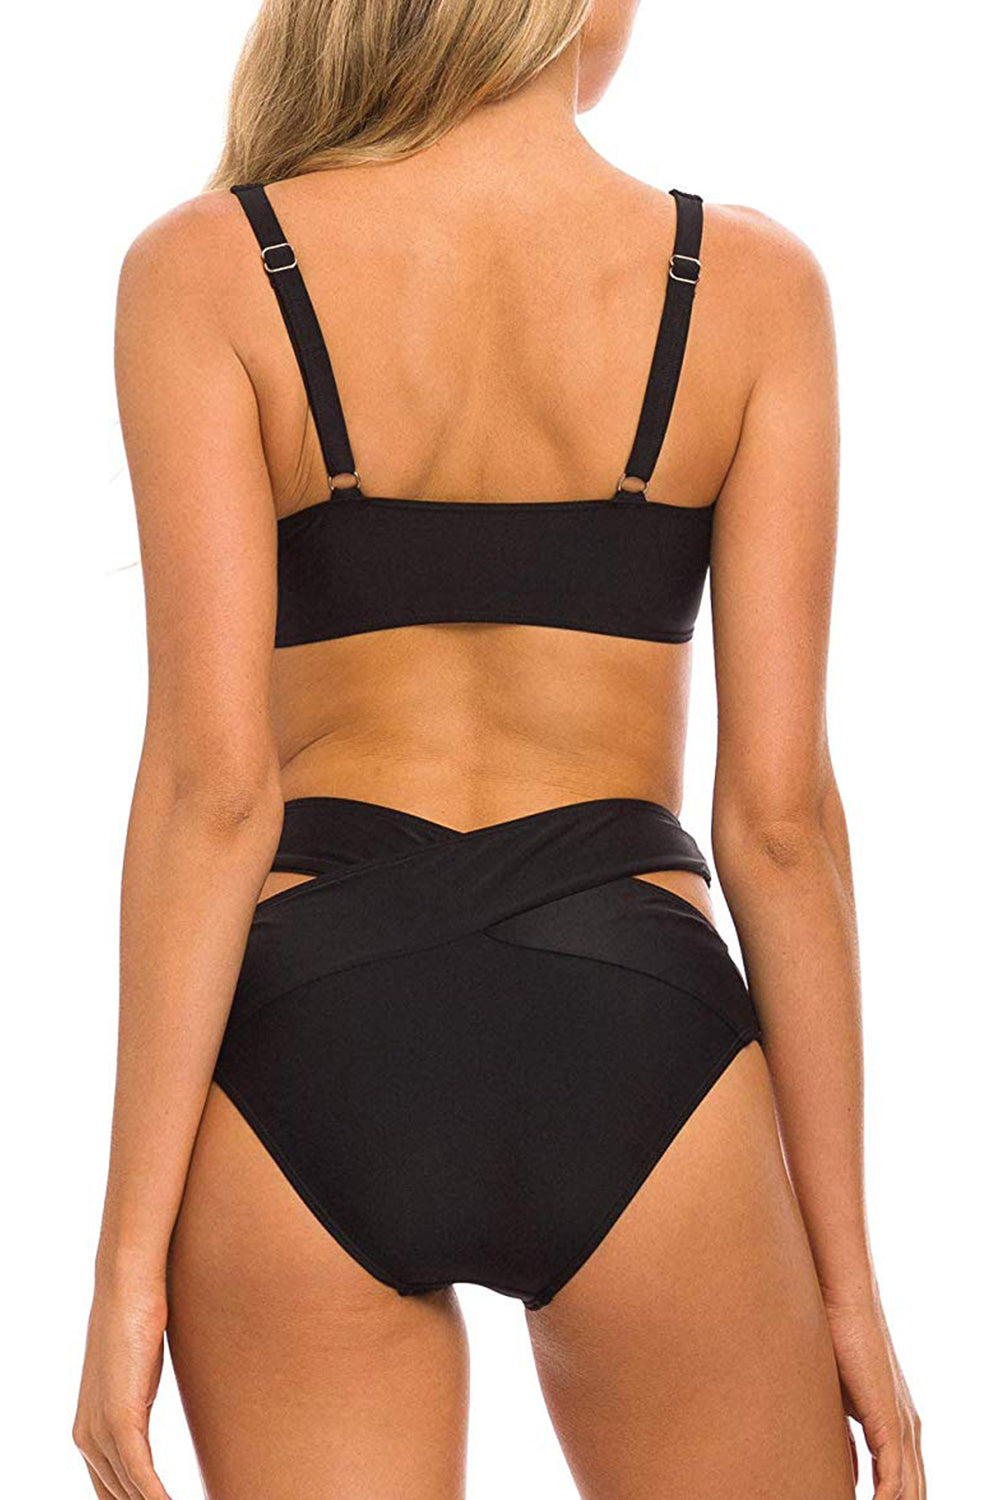 Women's Two Pieces Swimsuit High Waisted Cutout Bottoms Bikini Set